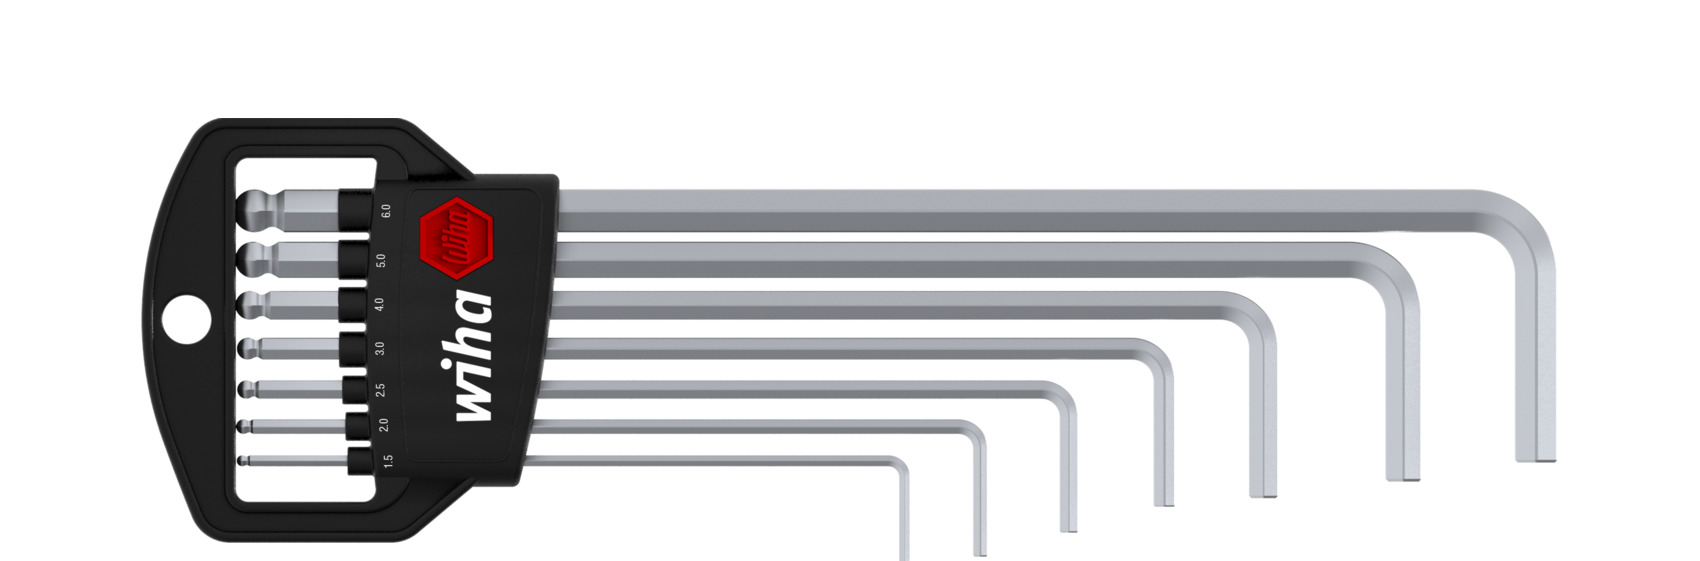 Stiftschlüssel Set im Classic Halter Sechskant-Kugelkopf 7-tlg.  mattverchromt in SB-Kartonverpackung (03723) | In Blisterverpackung |  Innensechskant | Wiha Classic Halter | Stiftschlüssel | Werkzeuge